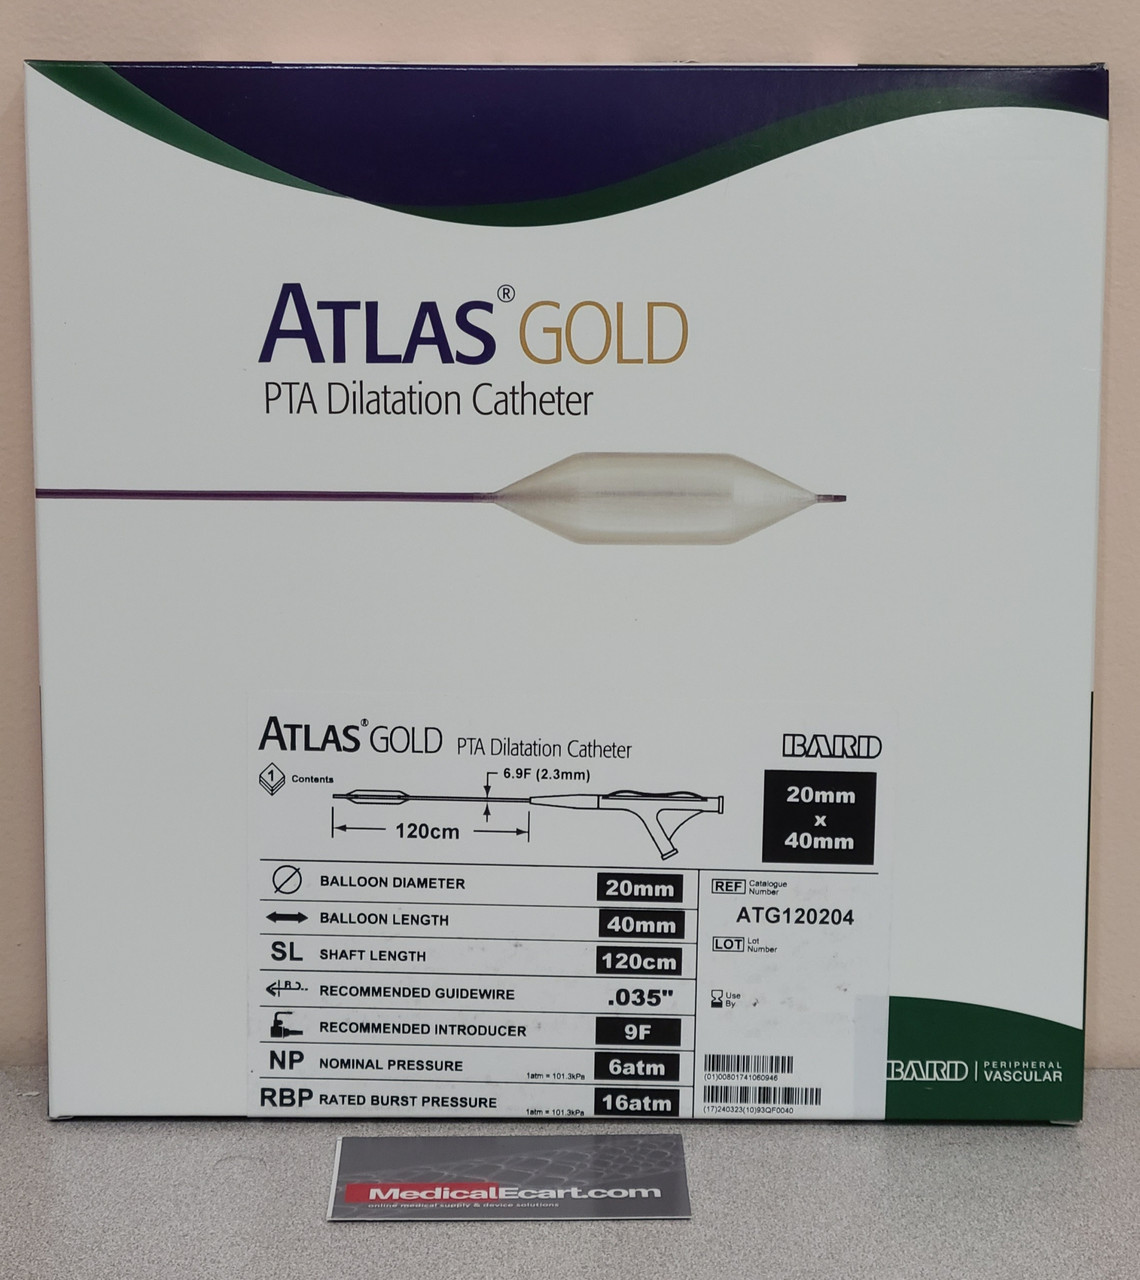 Bard ATG120204 Atlas™ Gold PTA Dilatation Catheter